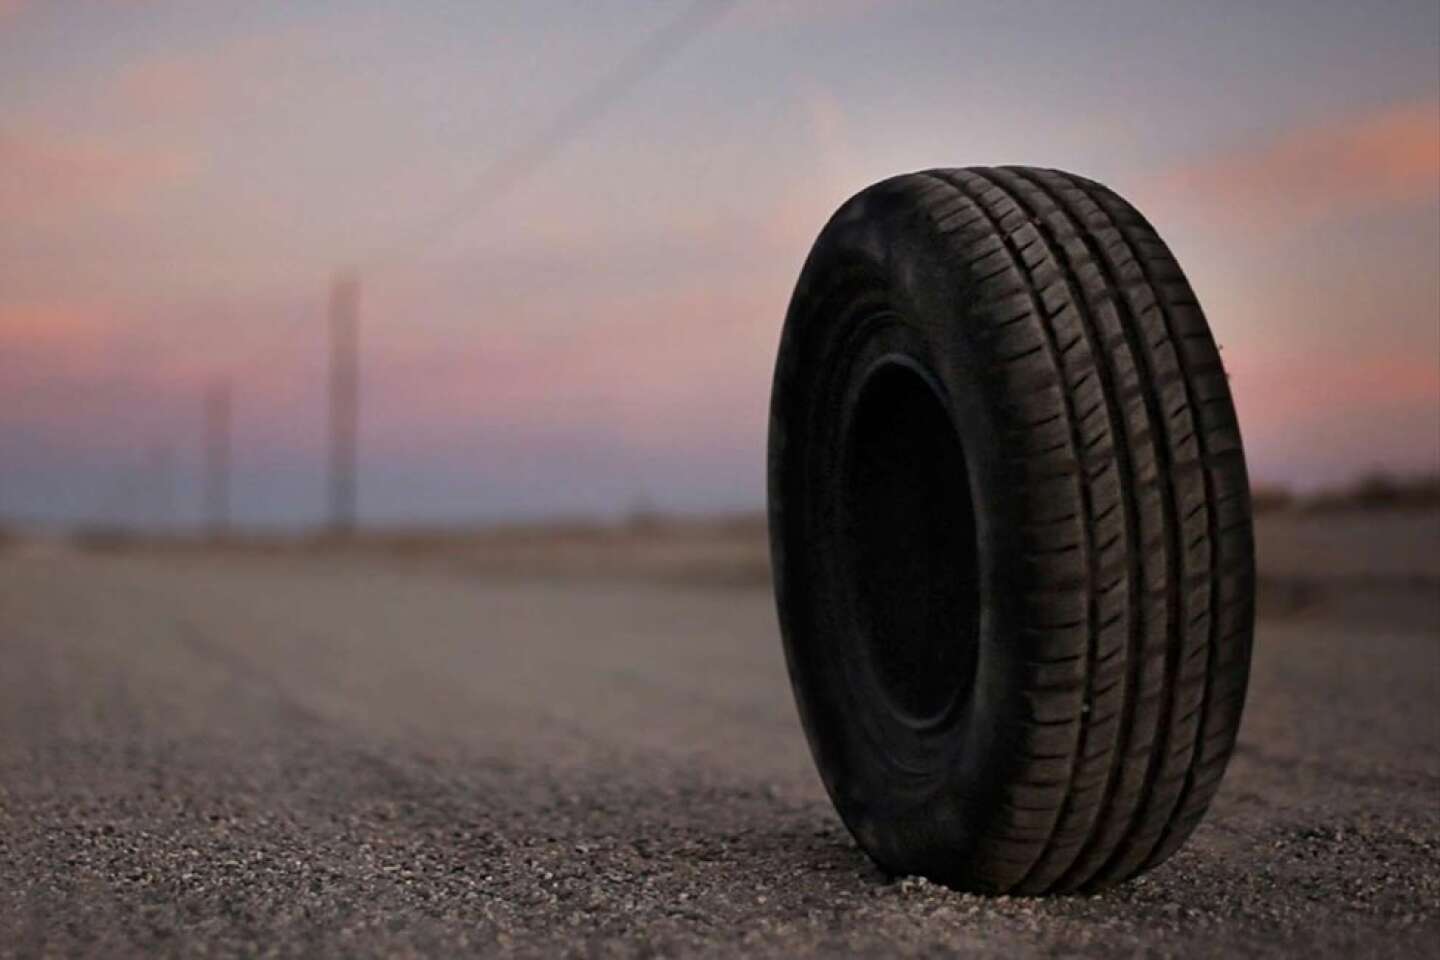 Rubber : un pneu n'importe quoi